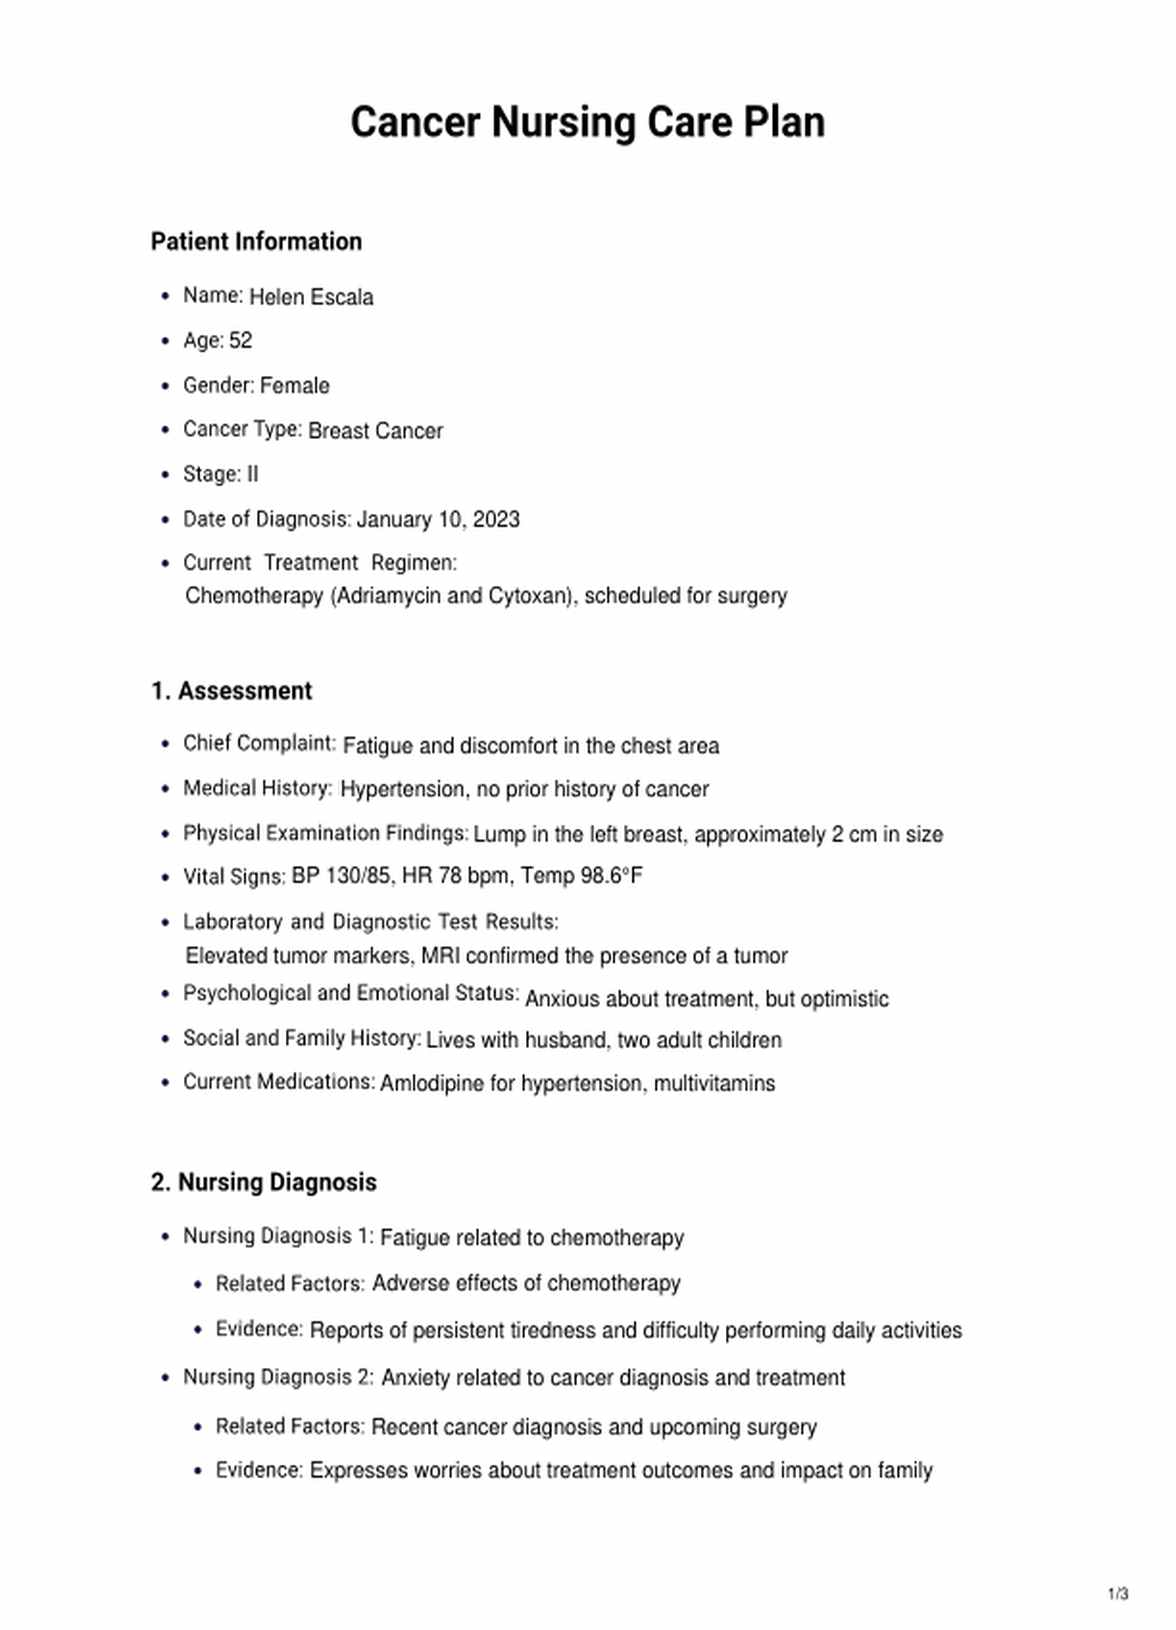 Cancer Nursing Care Plan PDF Example